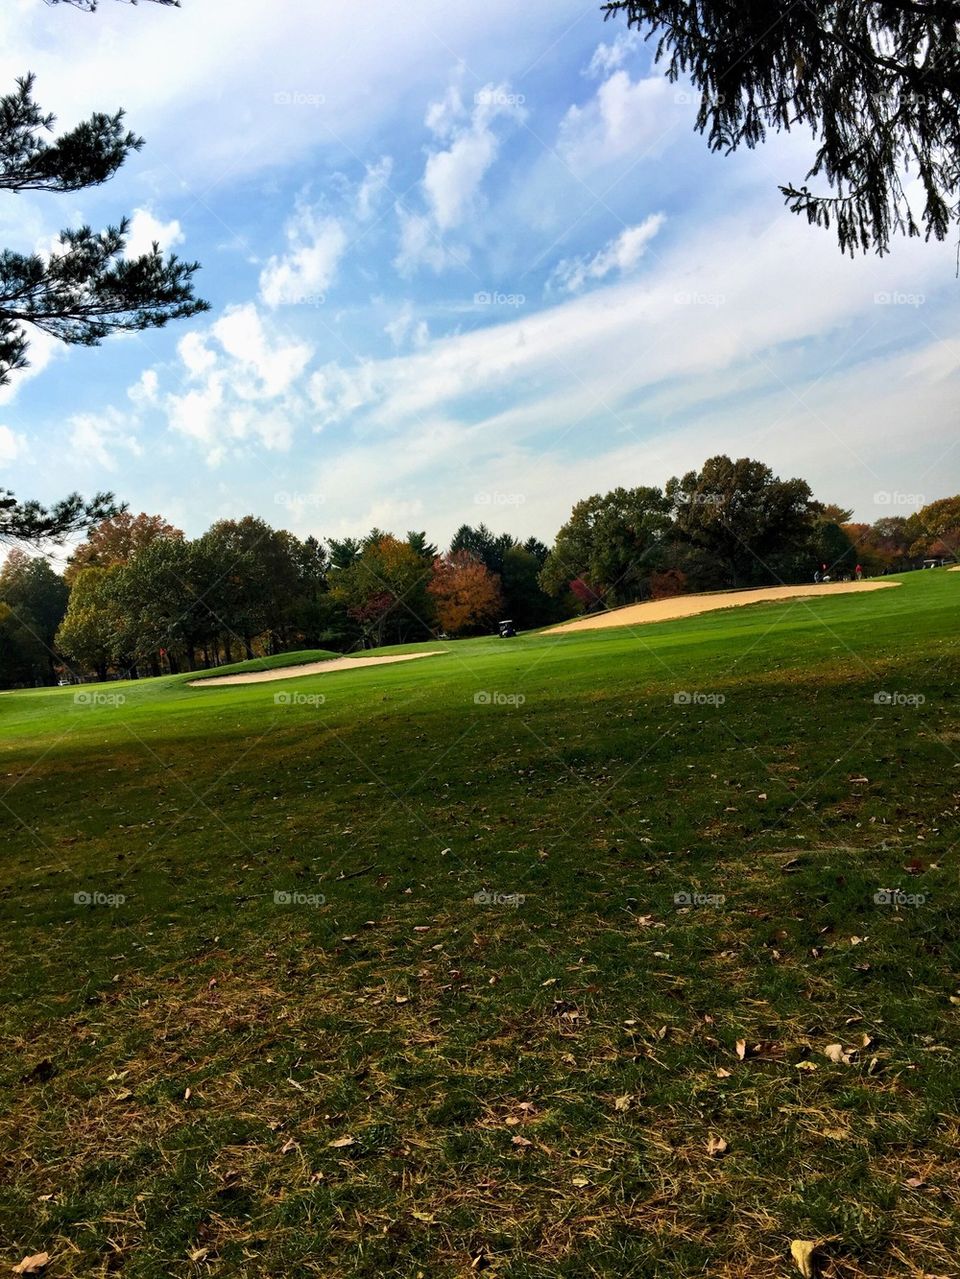 Fall golf 